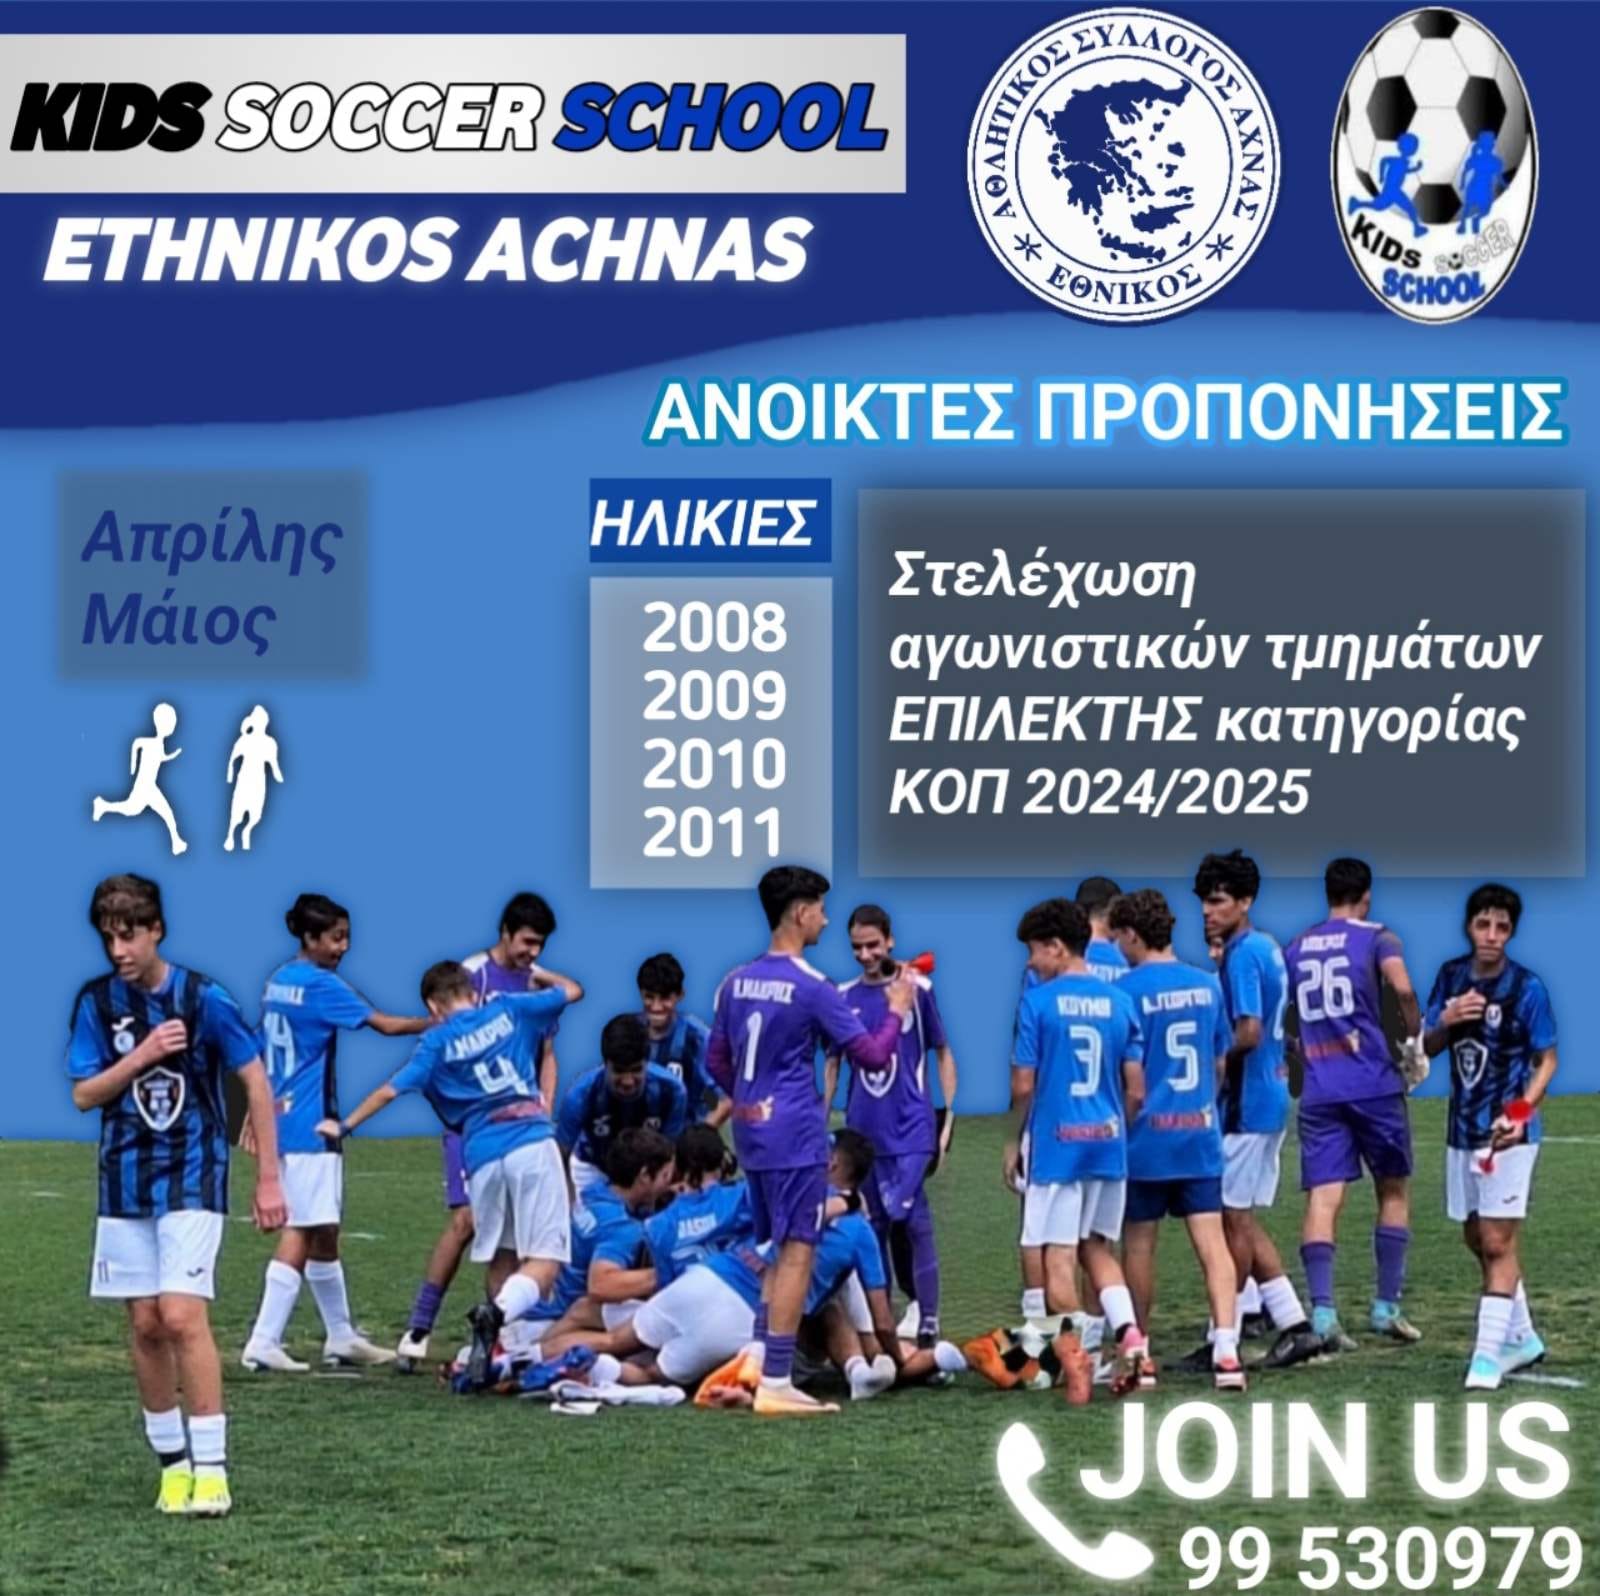 Kid’s Soccer School Εθνικός Άχνας: Ανοιχτές Προπονήσεις στα Αγωνιστικά Τμήματα για όλο τον Μάϊο και Ιούνιο! ΑΝΑΚΟΙΝΩΣΗ